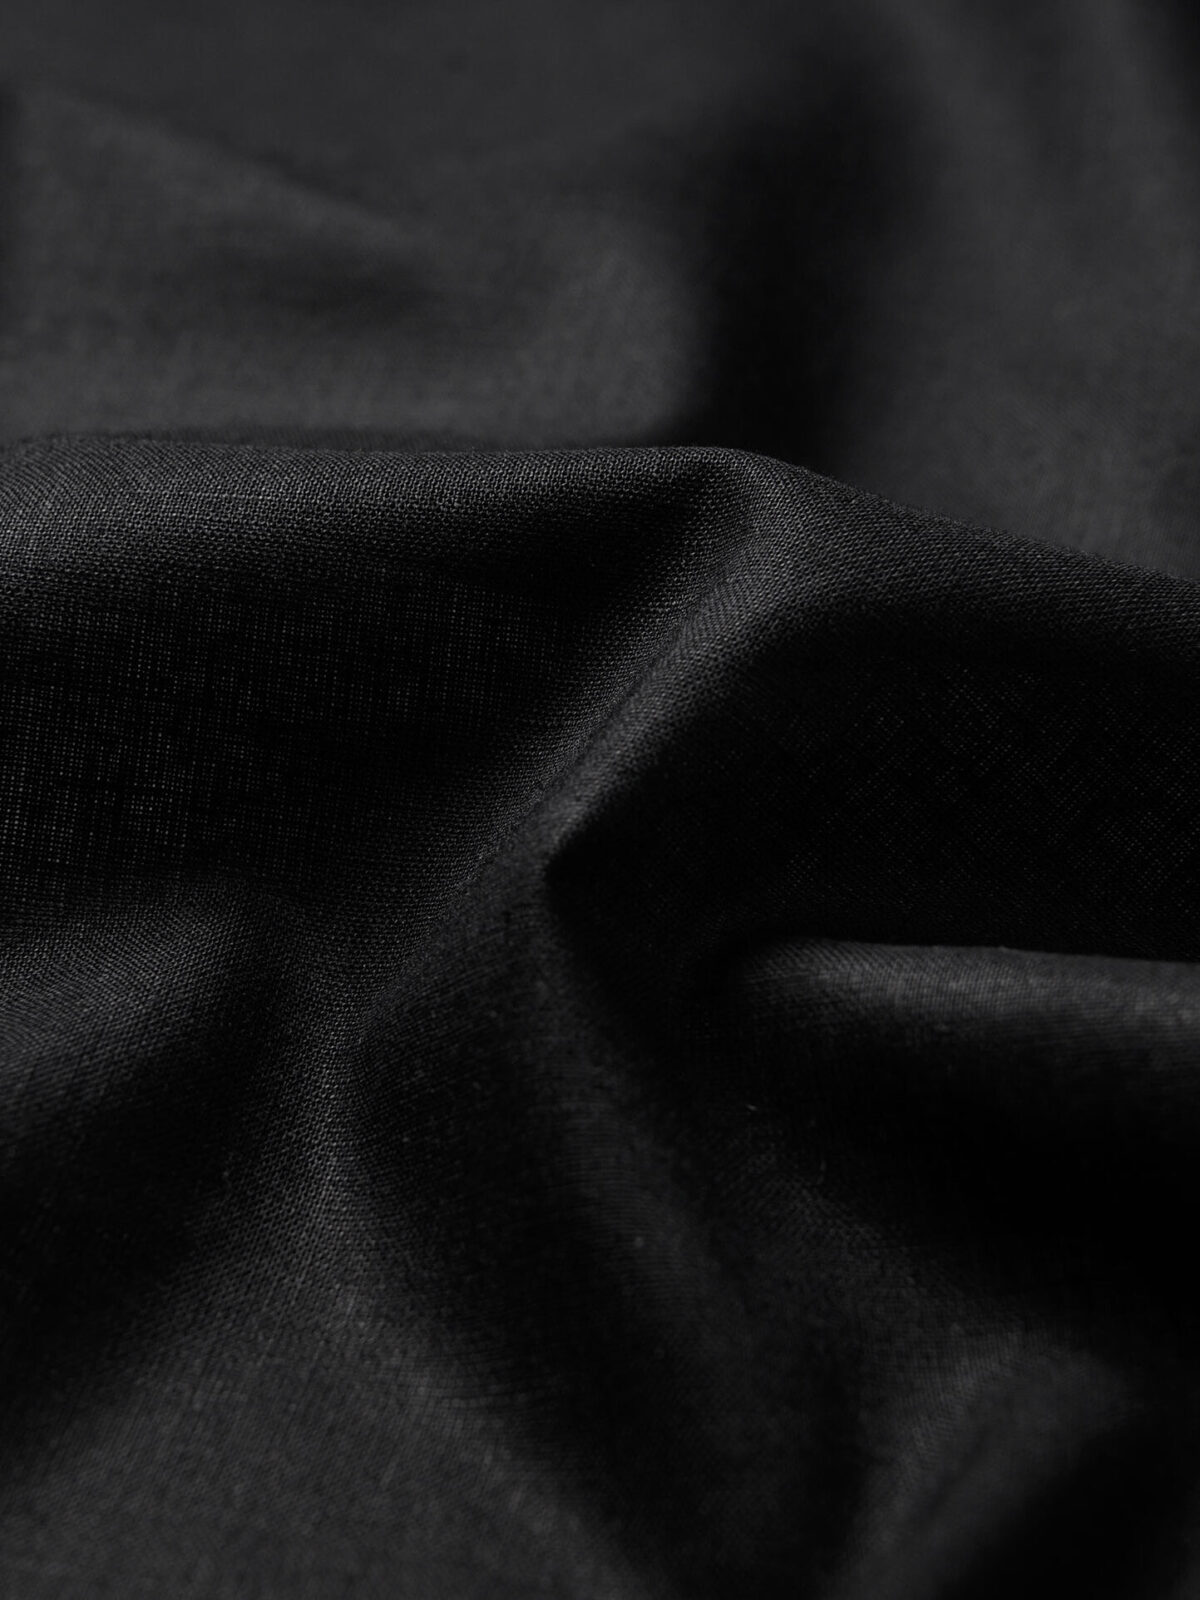 Black Cotton and Linen Blend Shirts by Proper Cloth